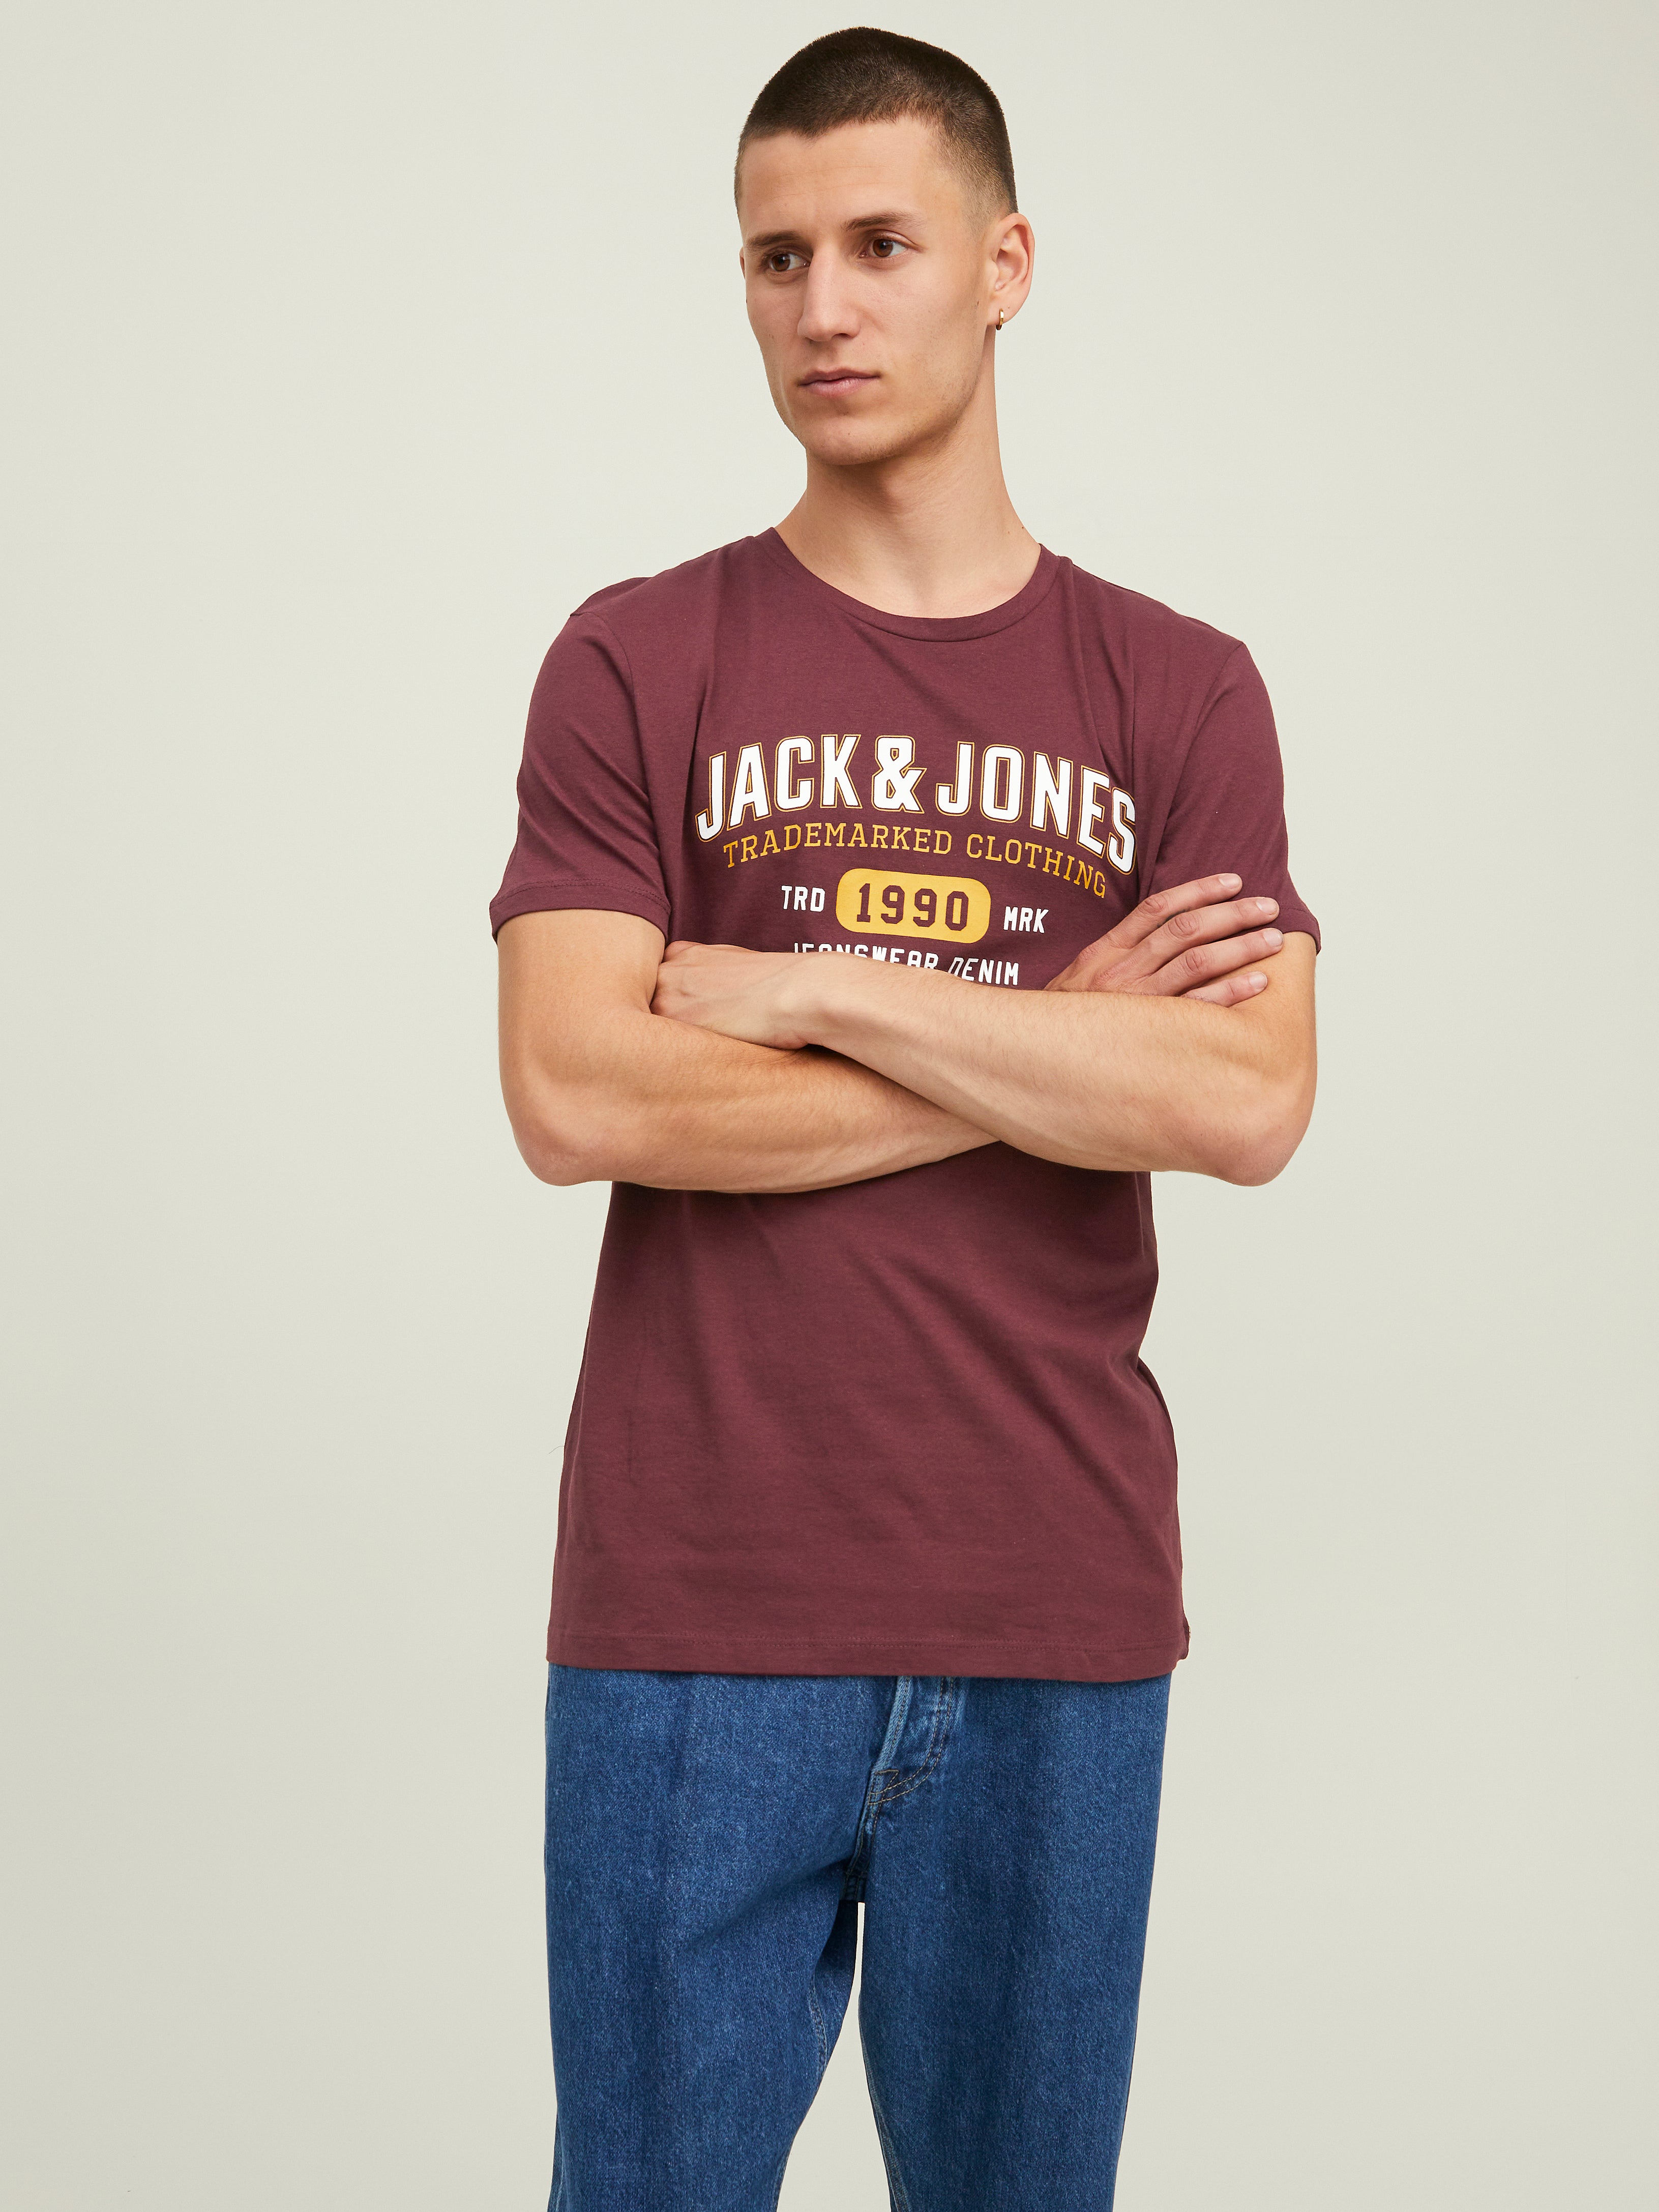 Blue L discount 56% MEN FASHION Shirts & T-shirts Sports Jack & Jones T-shirt 